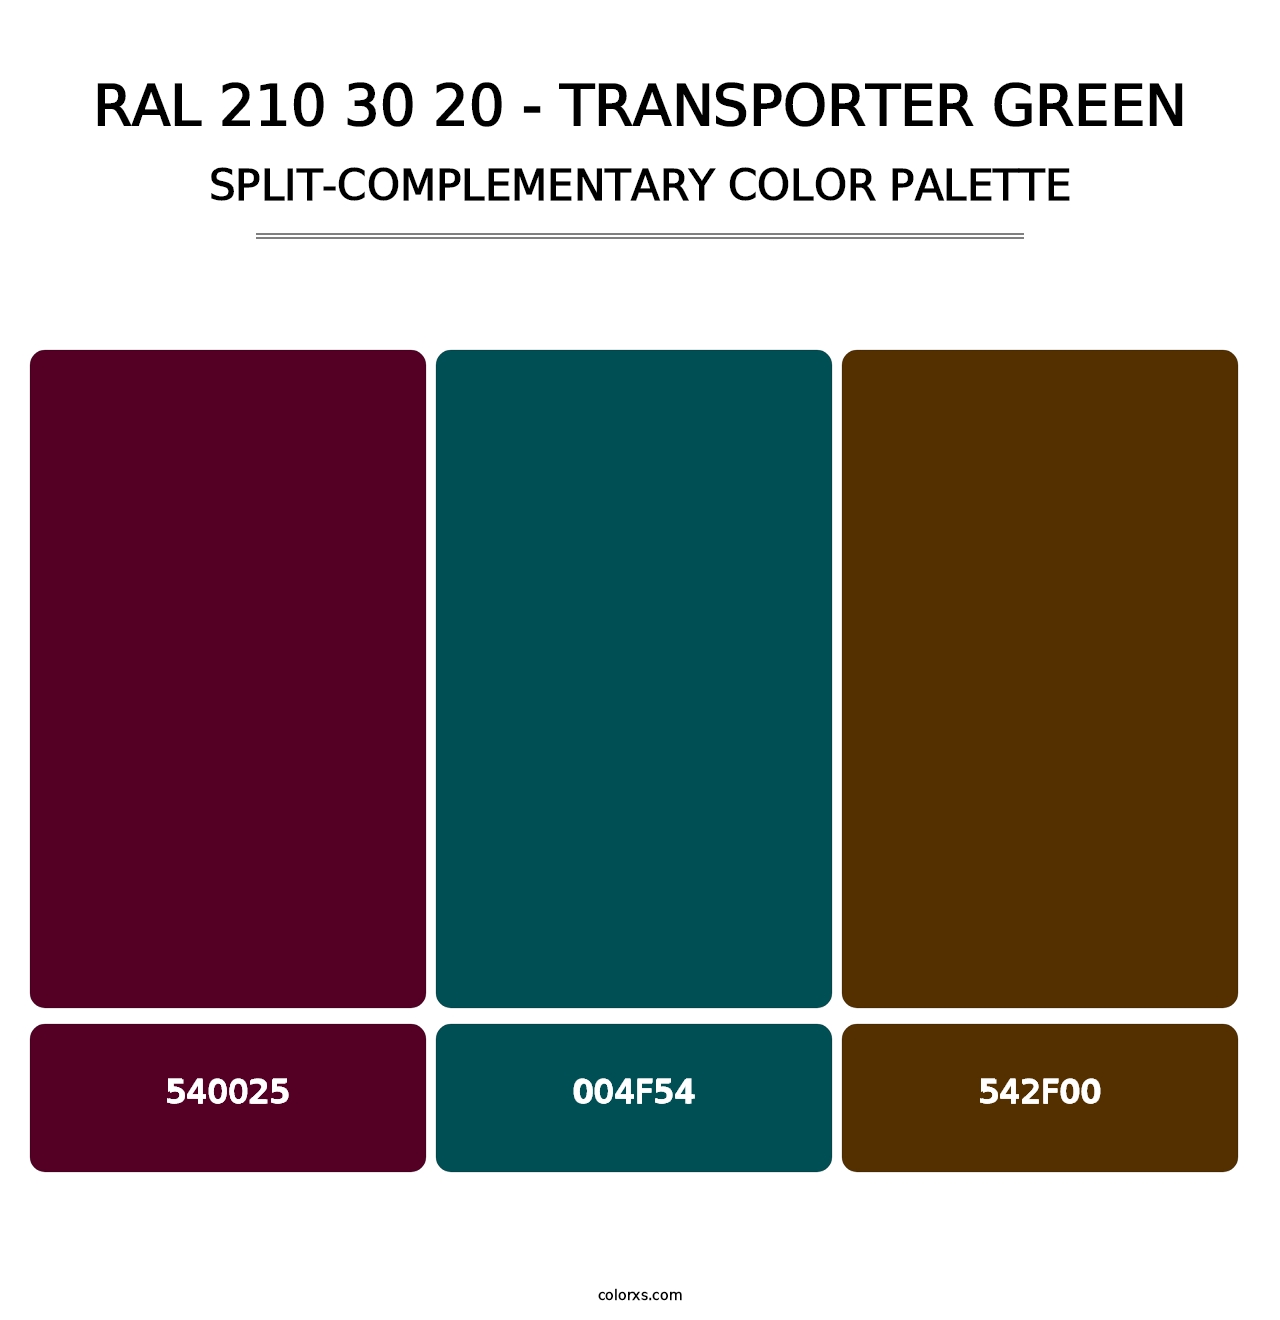 RAL 210 30 20 - Transporter Green - Split-Complementary Color Palette